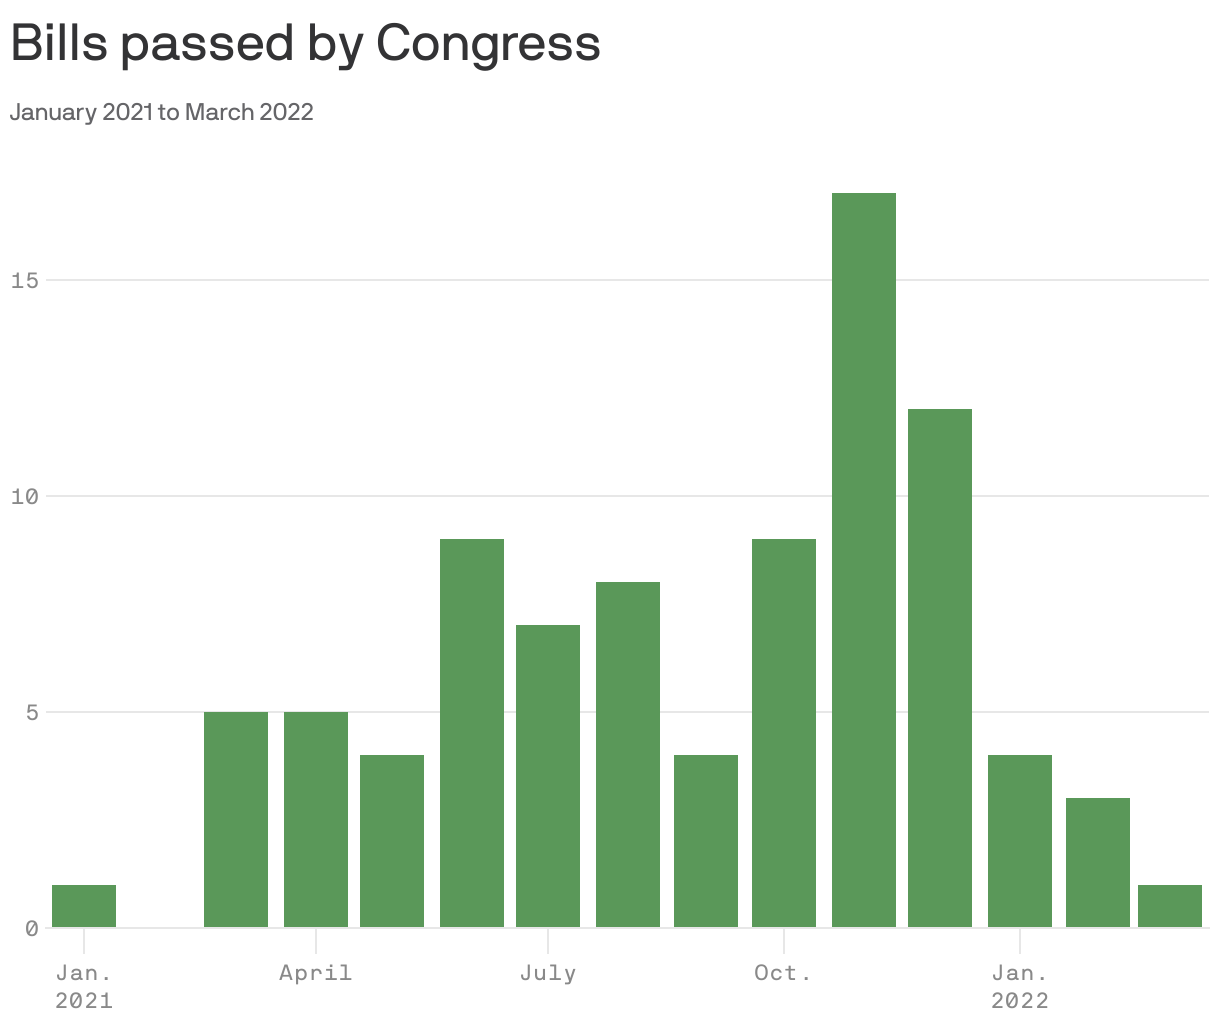  Bills passed by Congress